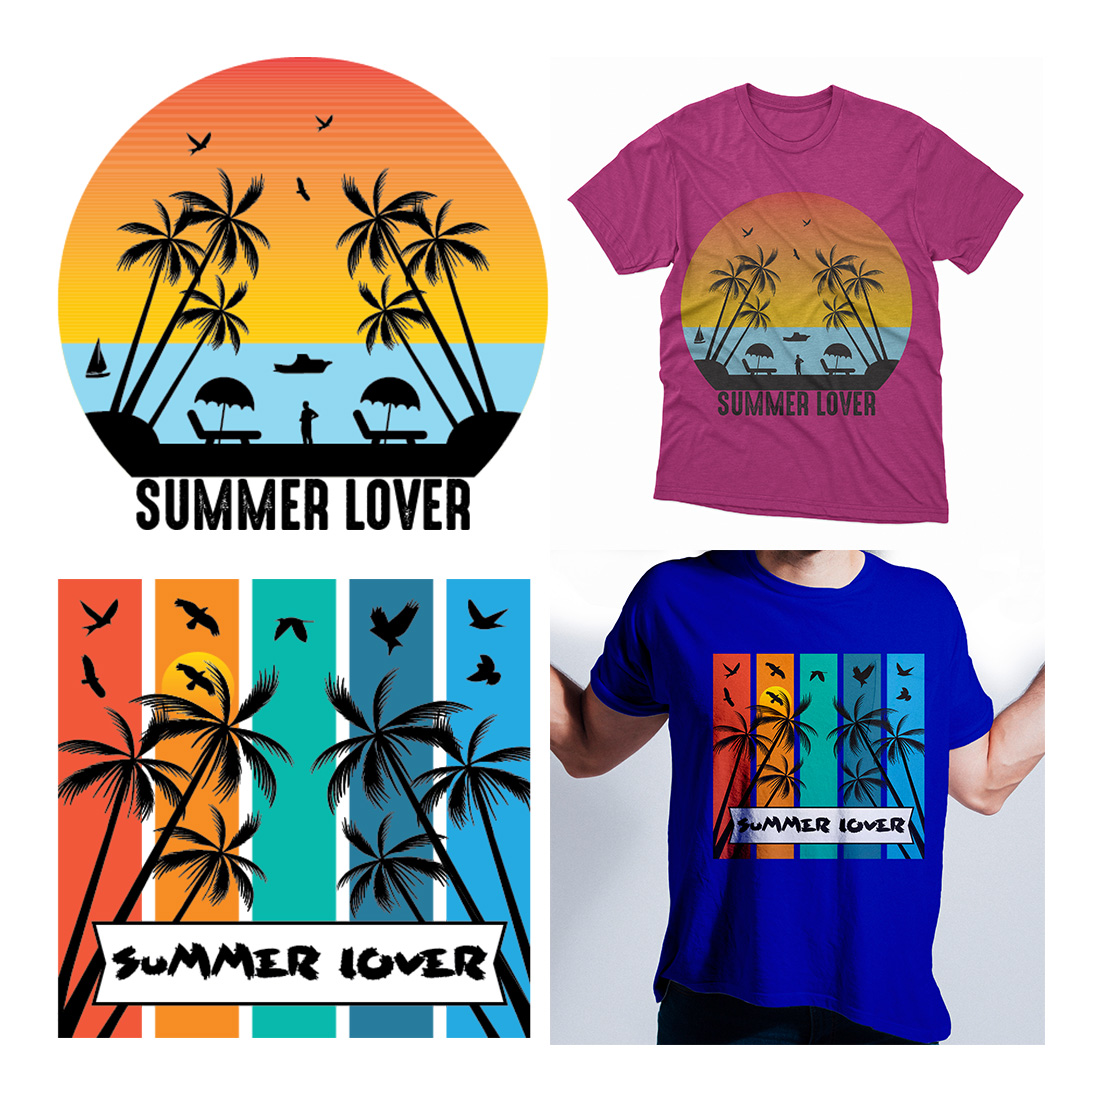 Summer Lover T-Shirt Design preview image.